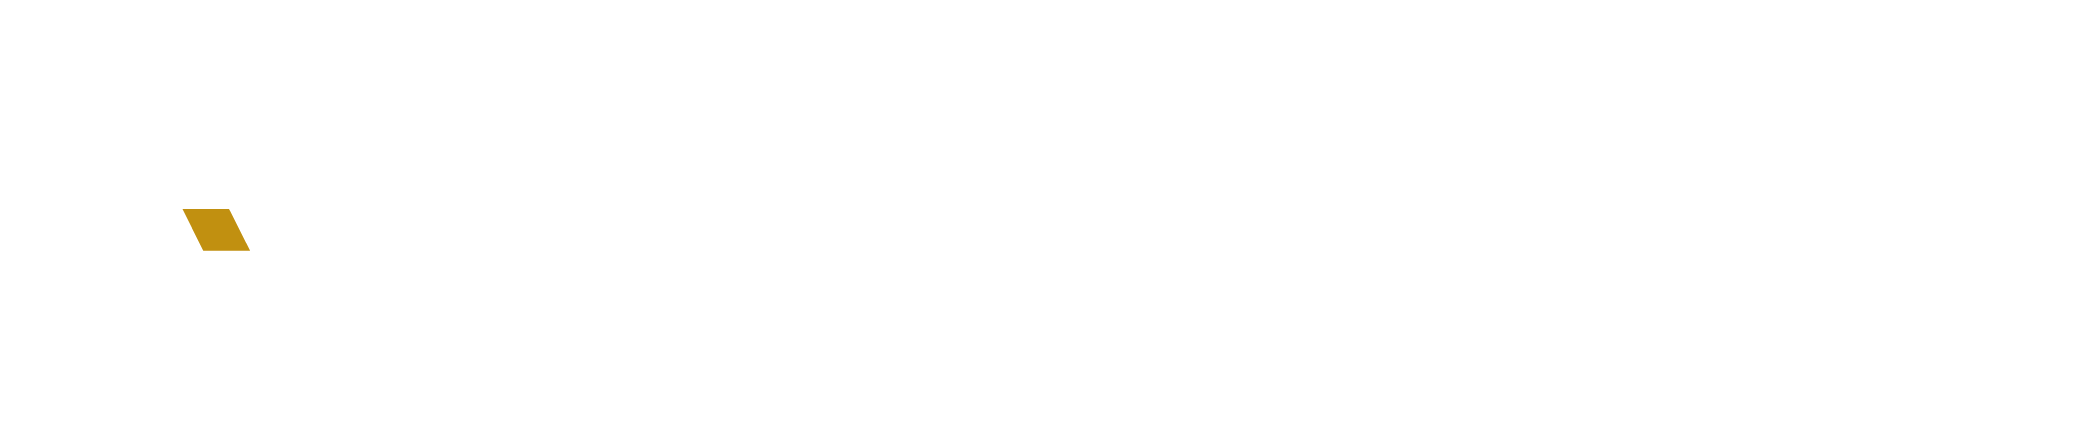 Apsion Training Services logo